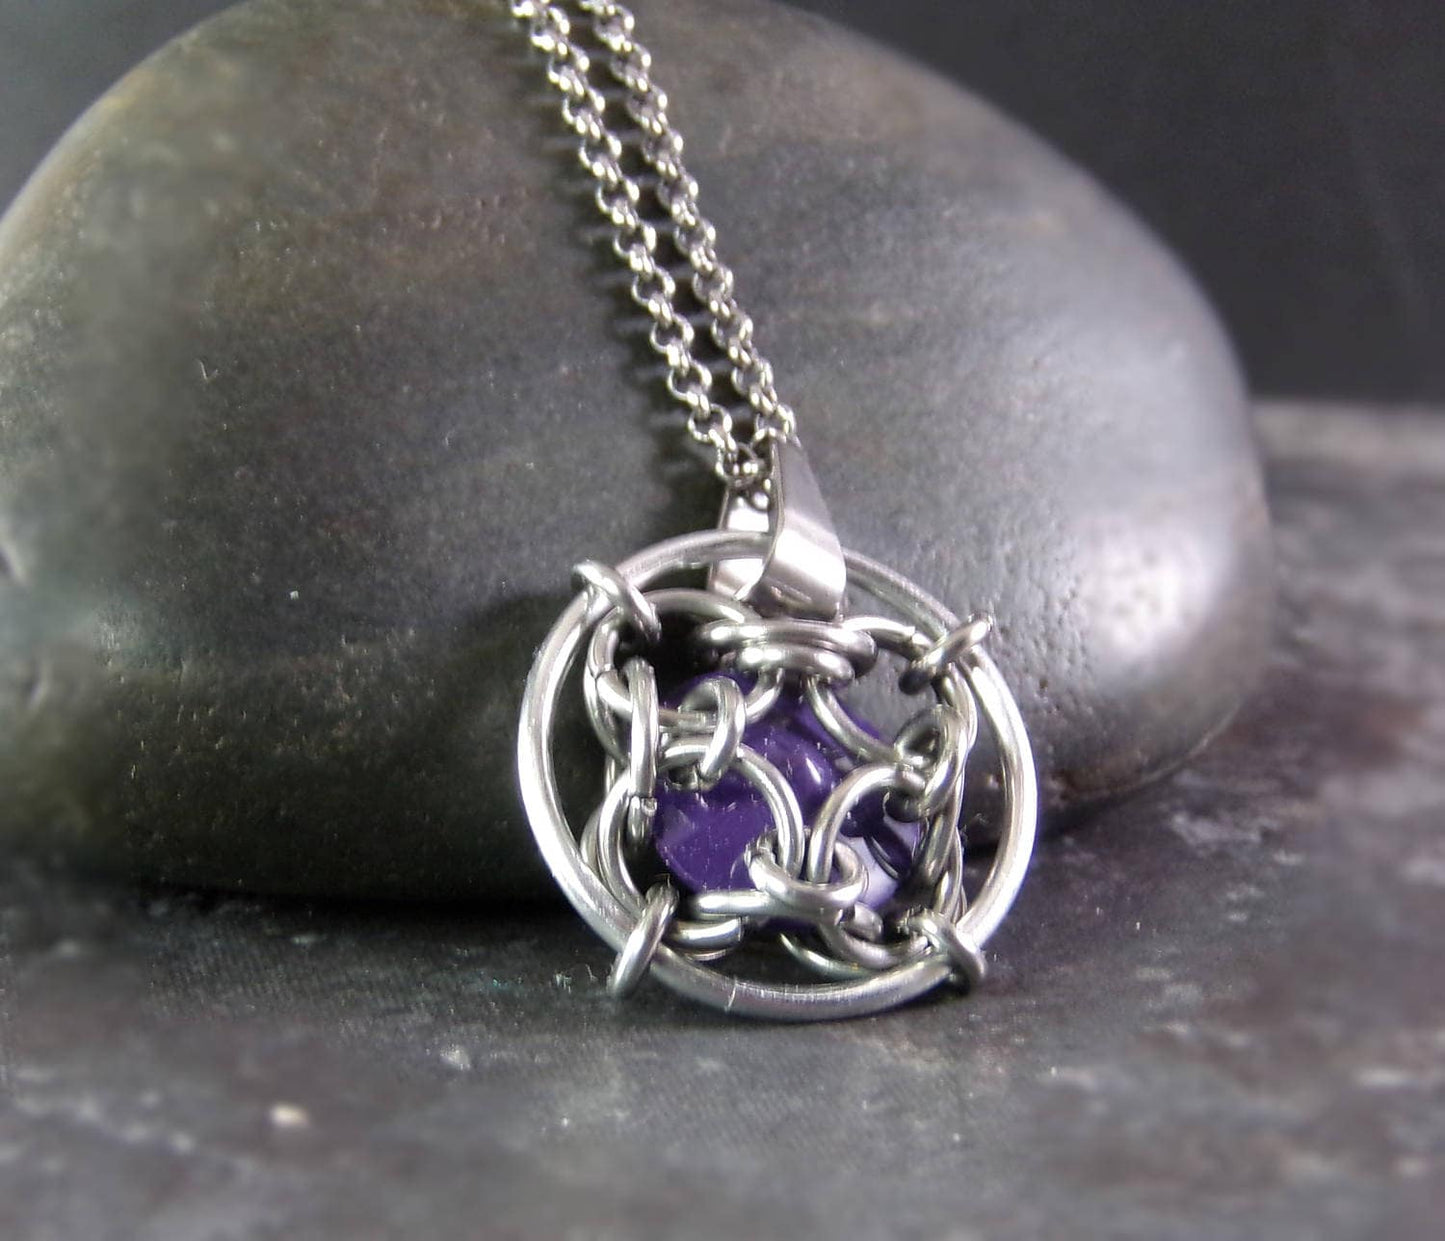 Stainless Steel Chainmaille Pendant - Purple Swarovski Crystal Pendant - Original Pendant Design - Chainmaille Jewelry  - Quarter Pendant